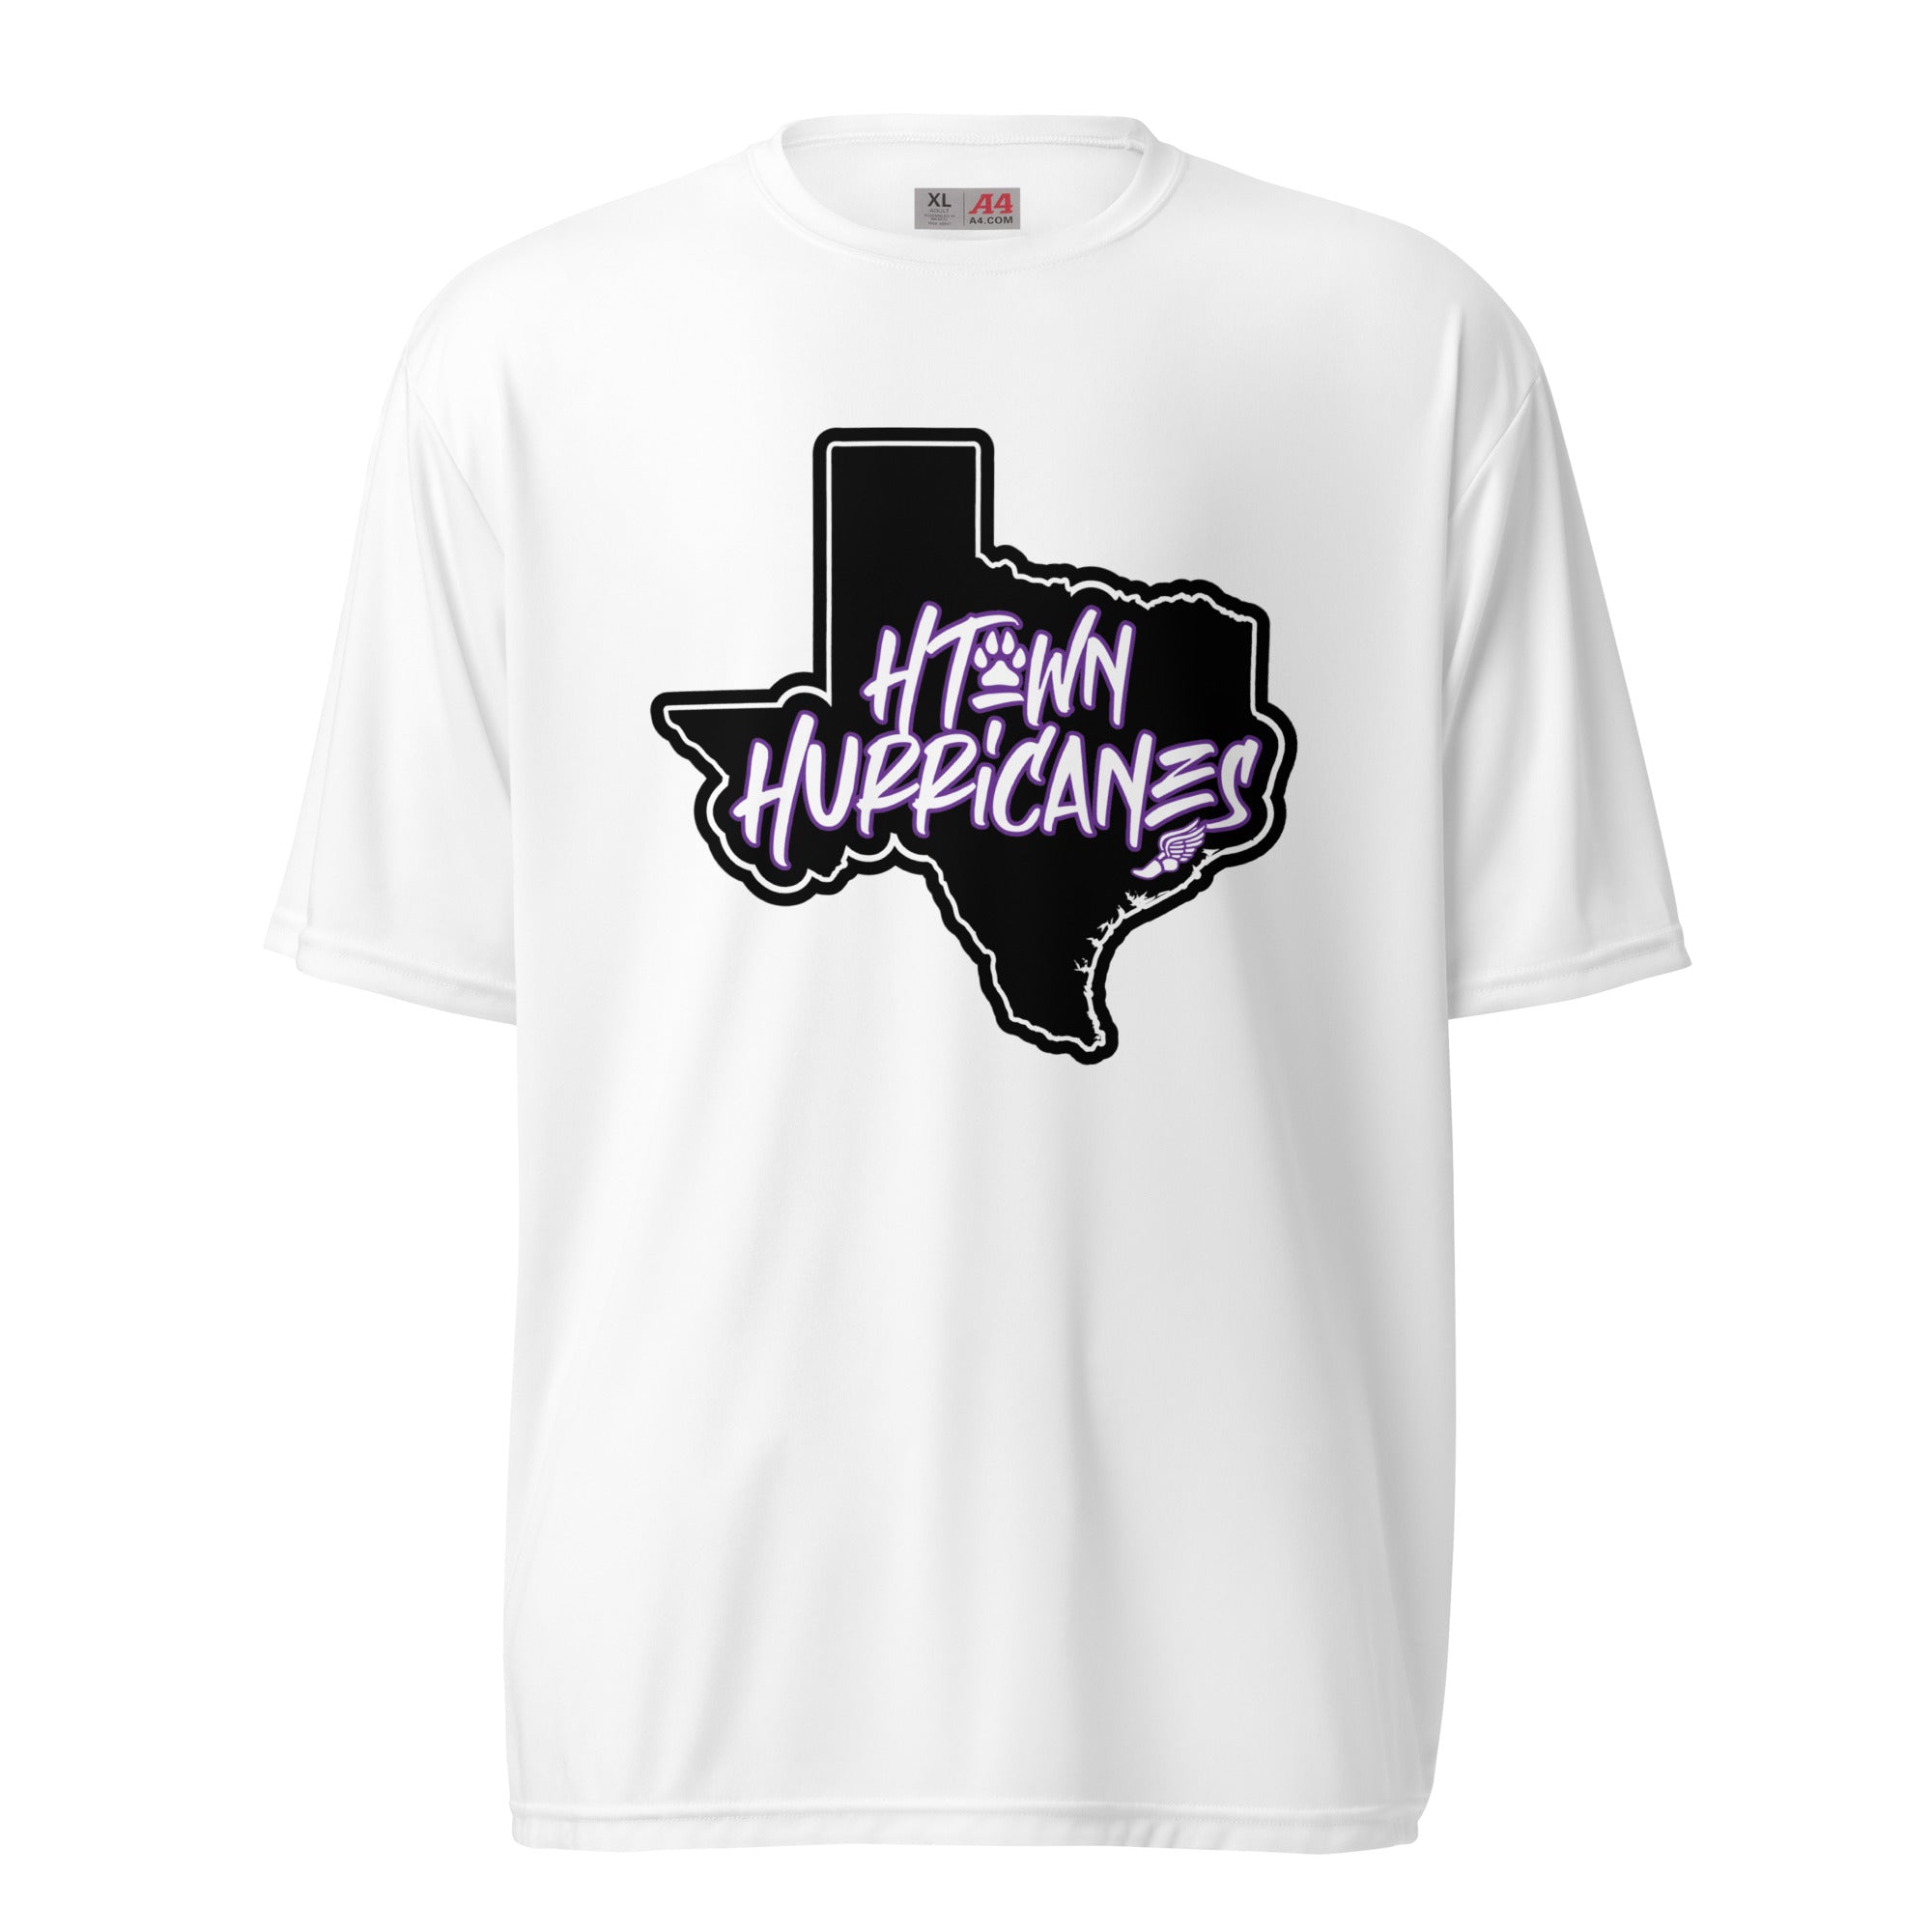 H-Town Hurricanes Unisex performance crew neck t-shirt